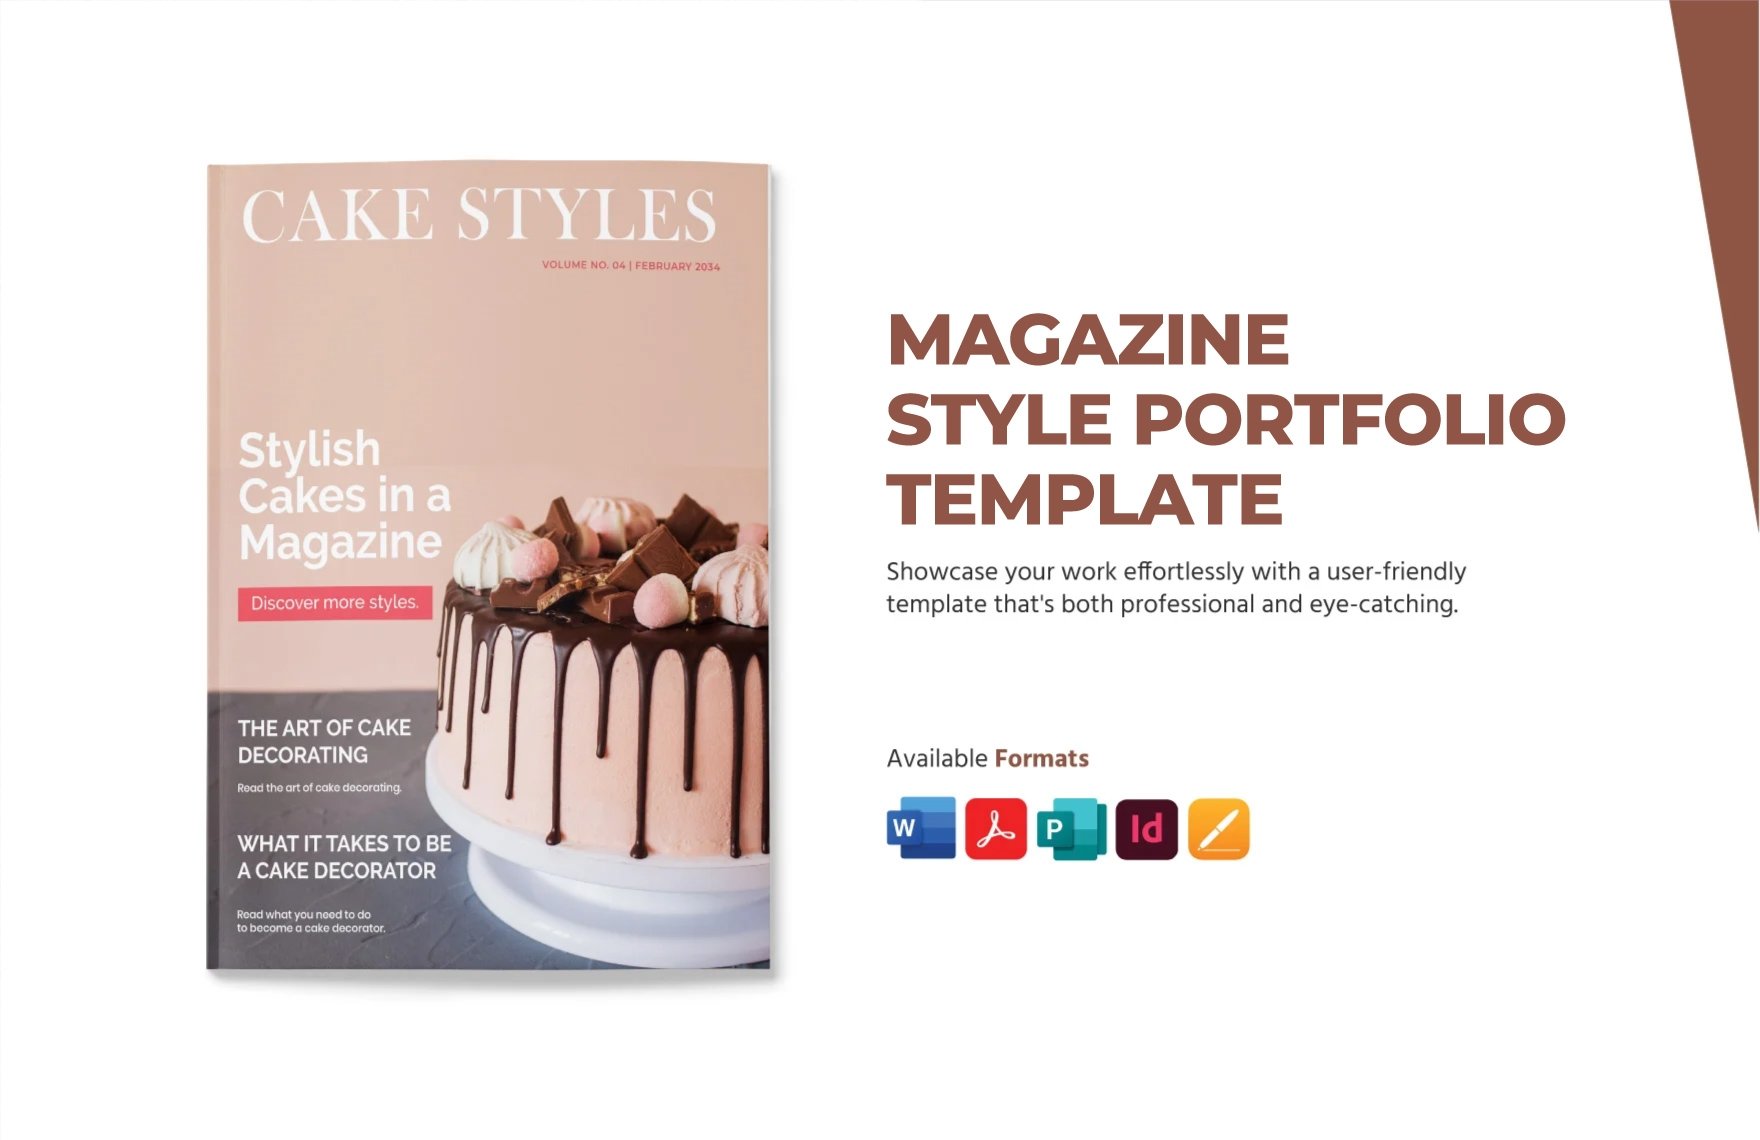 Magazine Style Portfolio Template